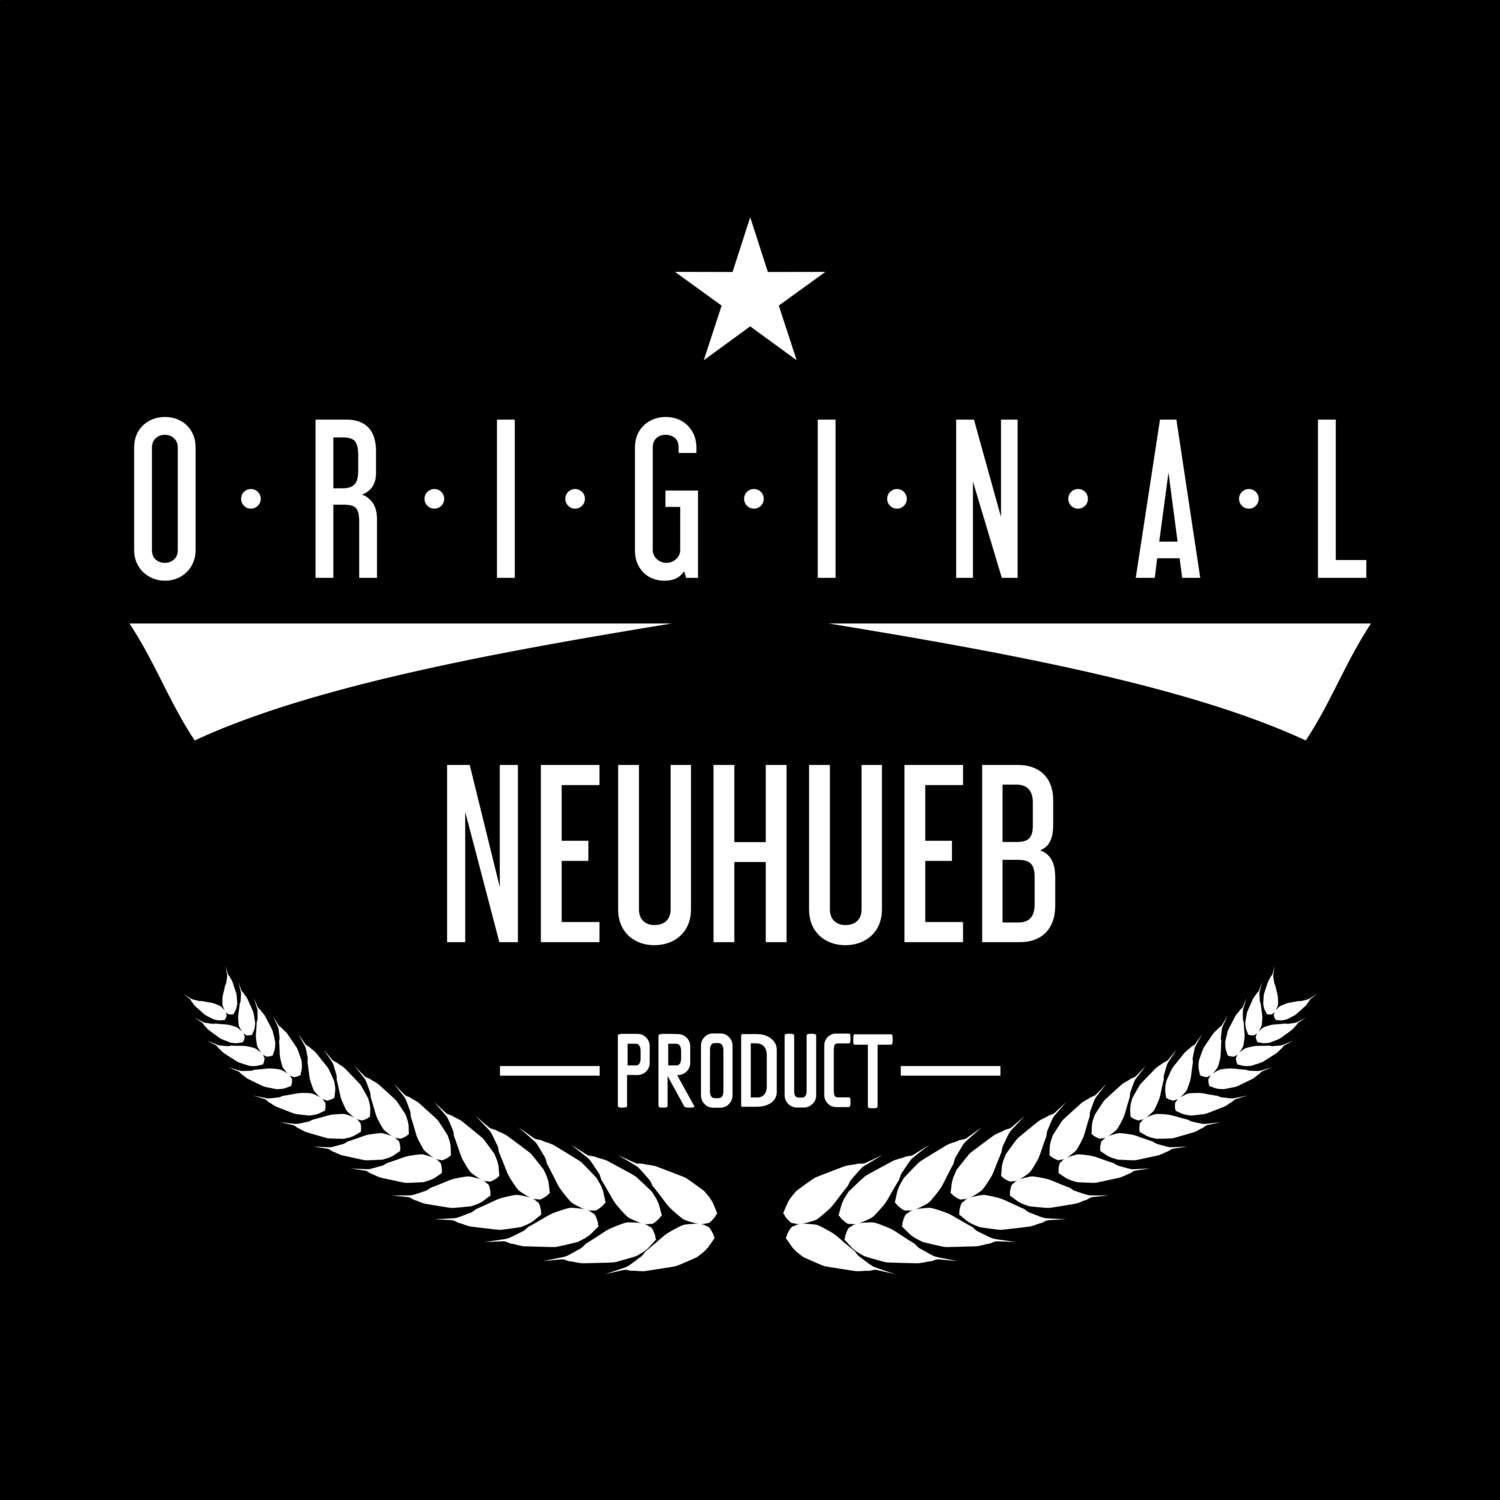 Neuhueb T-Shirt »Original Product«